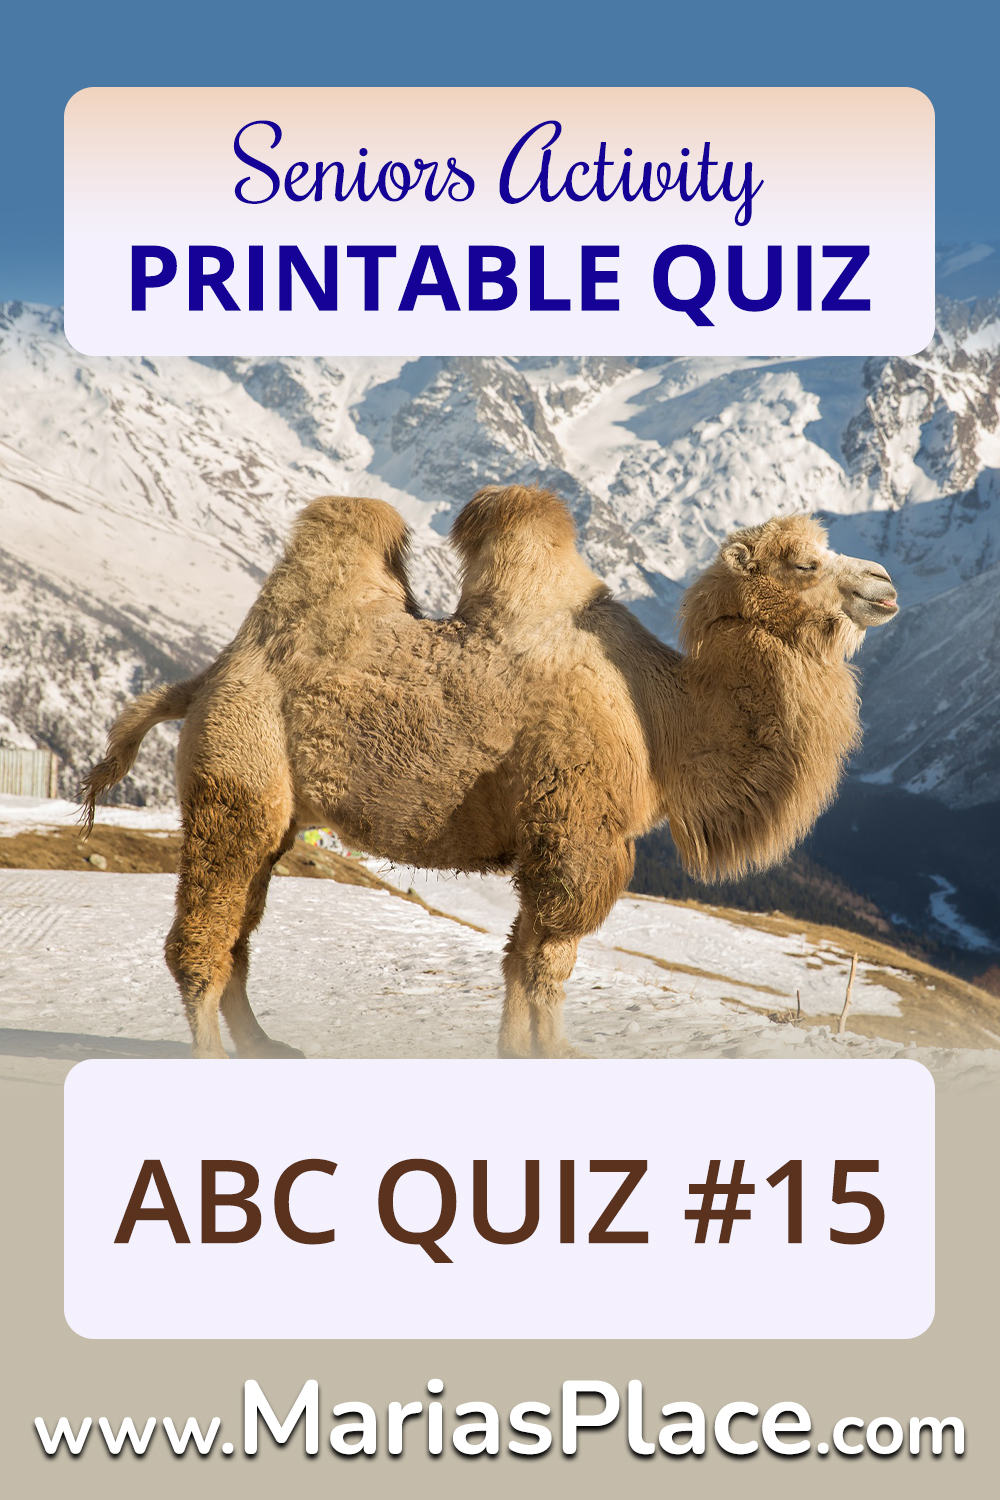 ABC Quiz #15